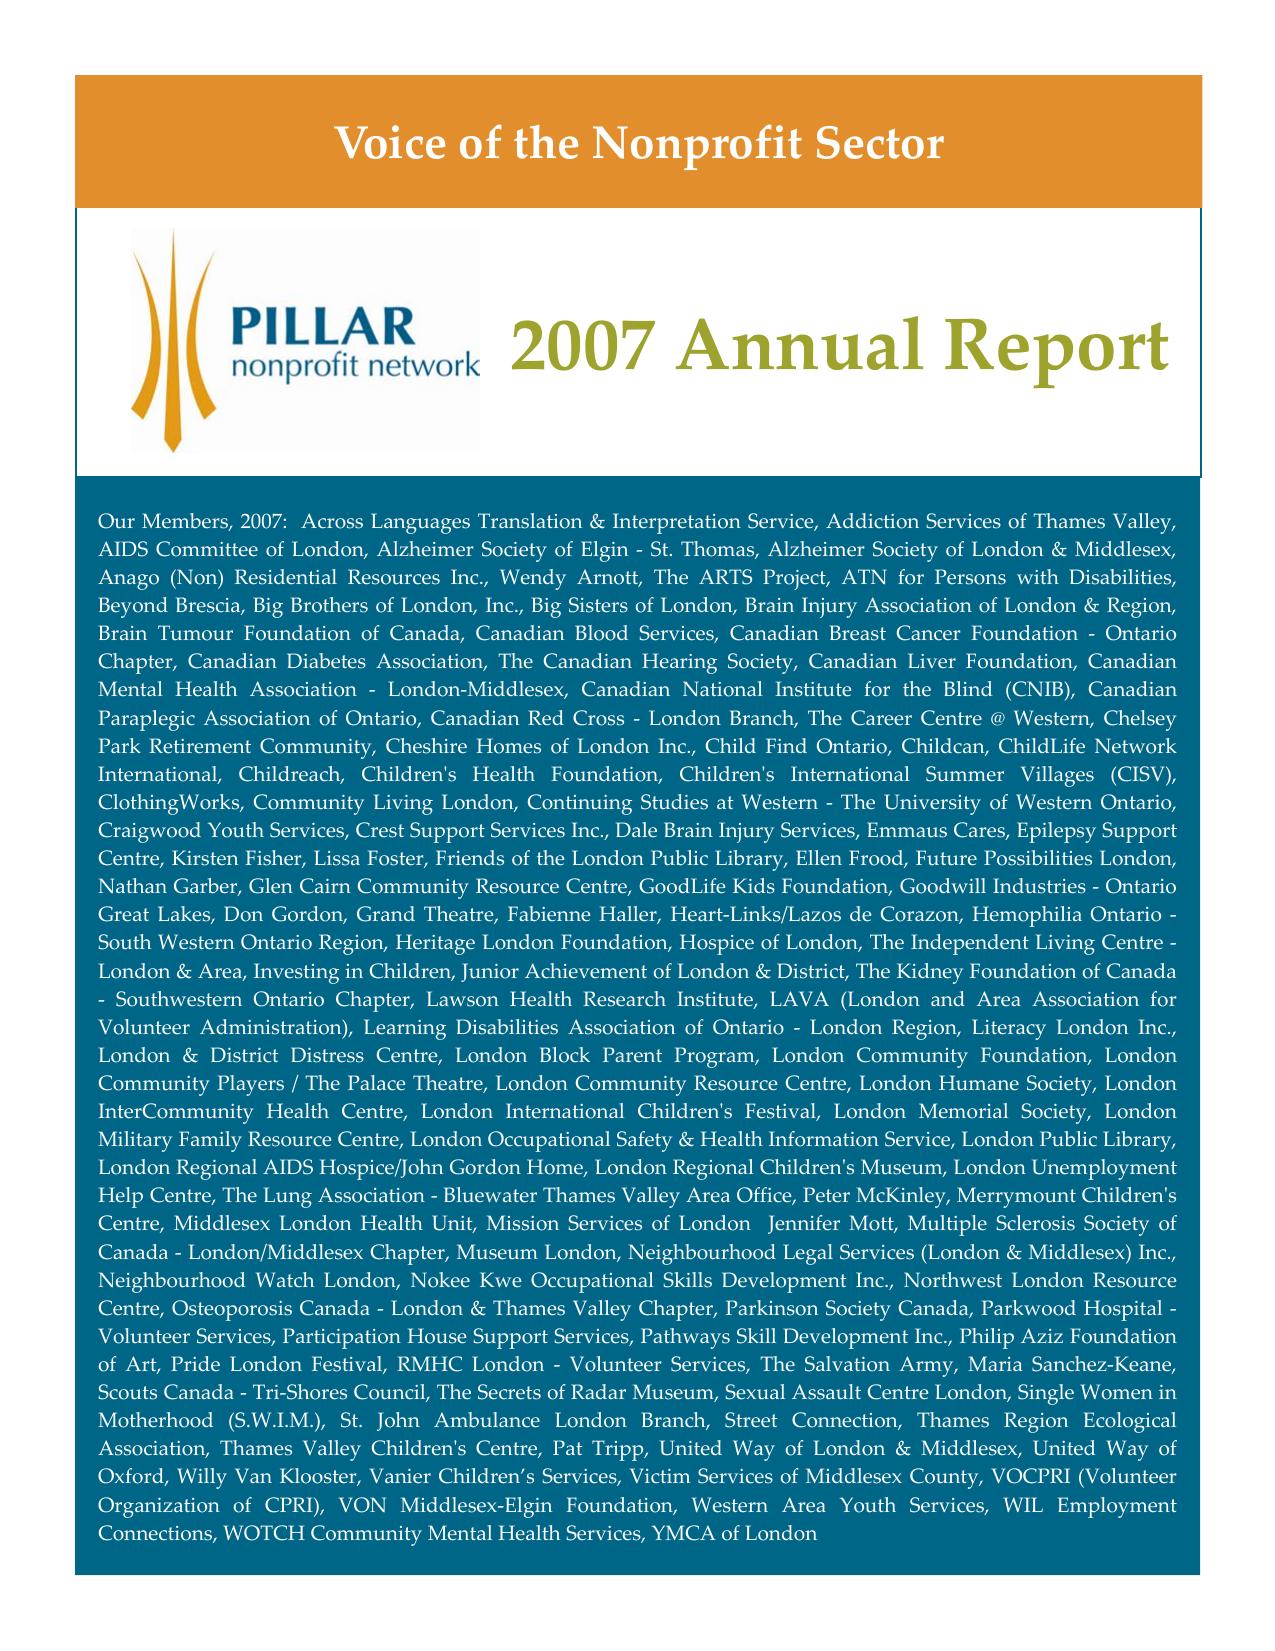 PILLARNONPROFIT Annual Report